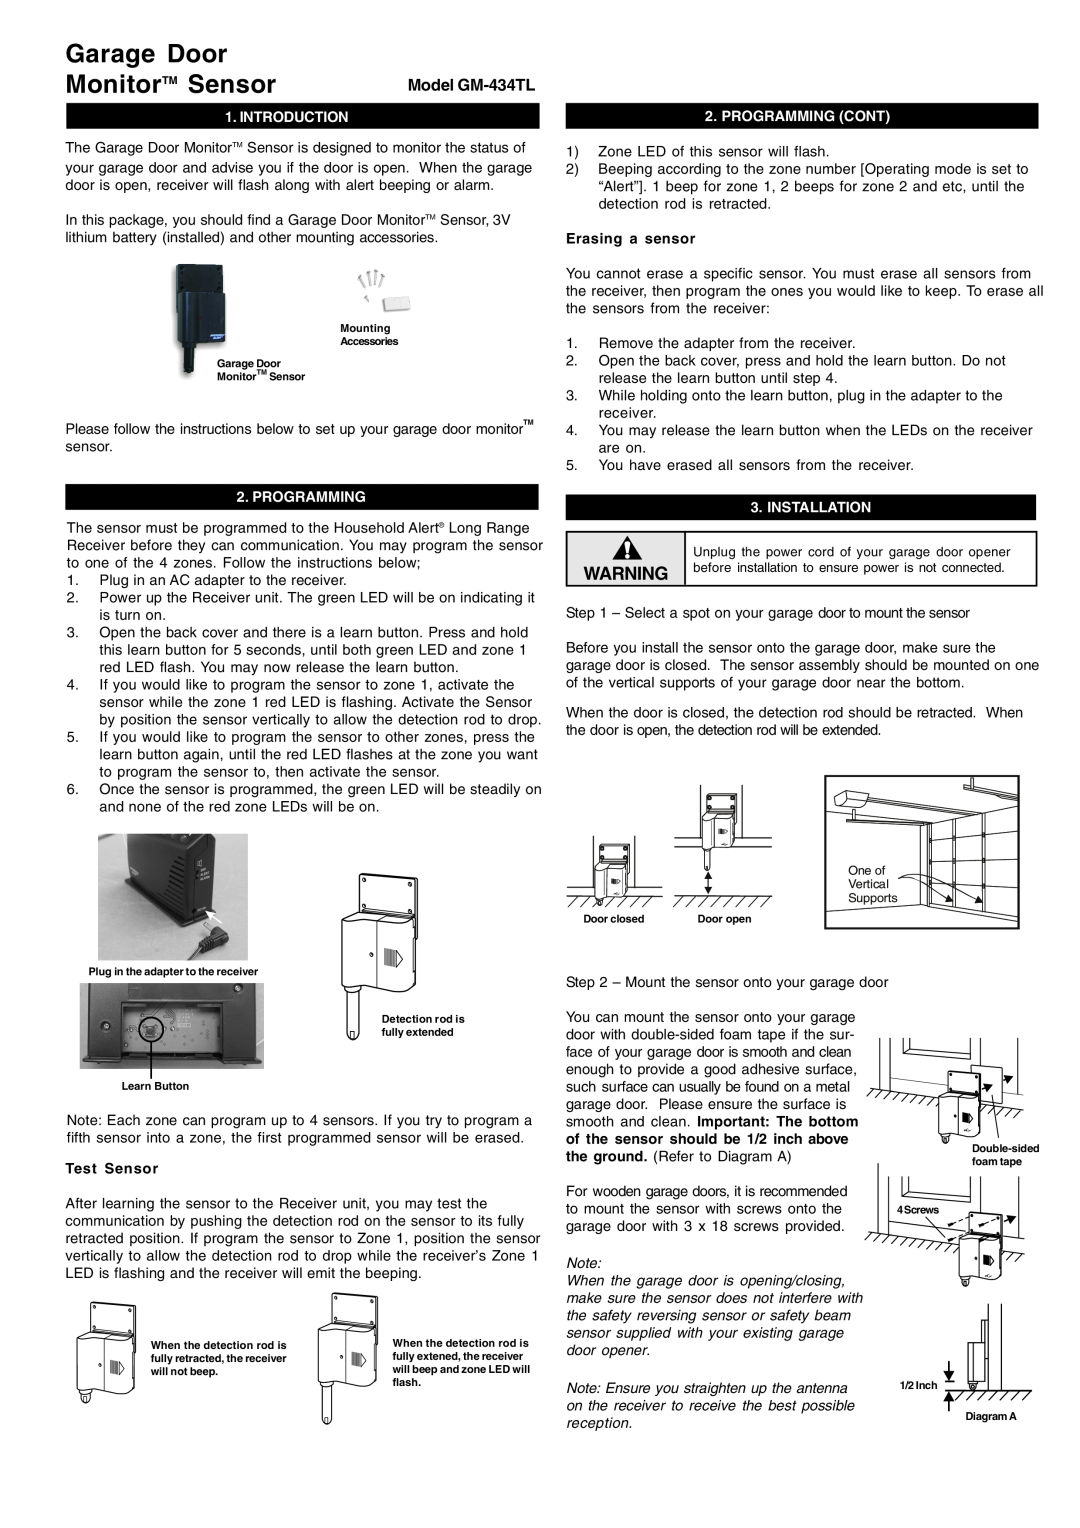 SkyLink GM-434TL manual Introduction, Programming Cont, Erasing a sensor, Installation, Test Sensor, Garage Door 